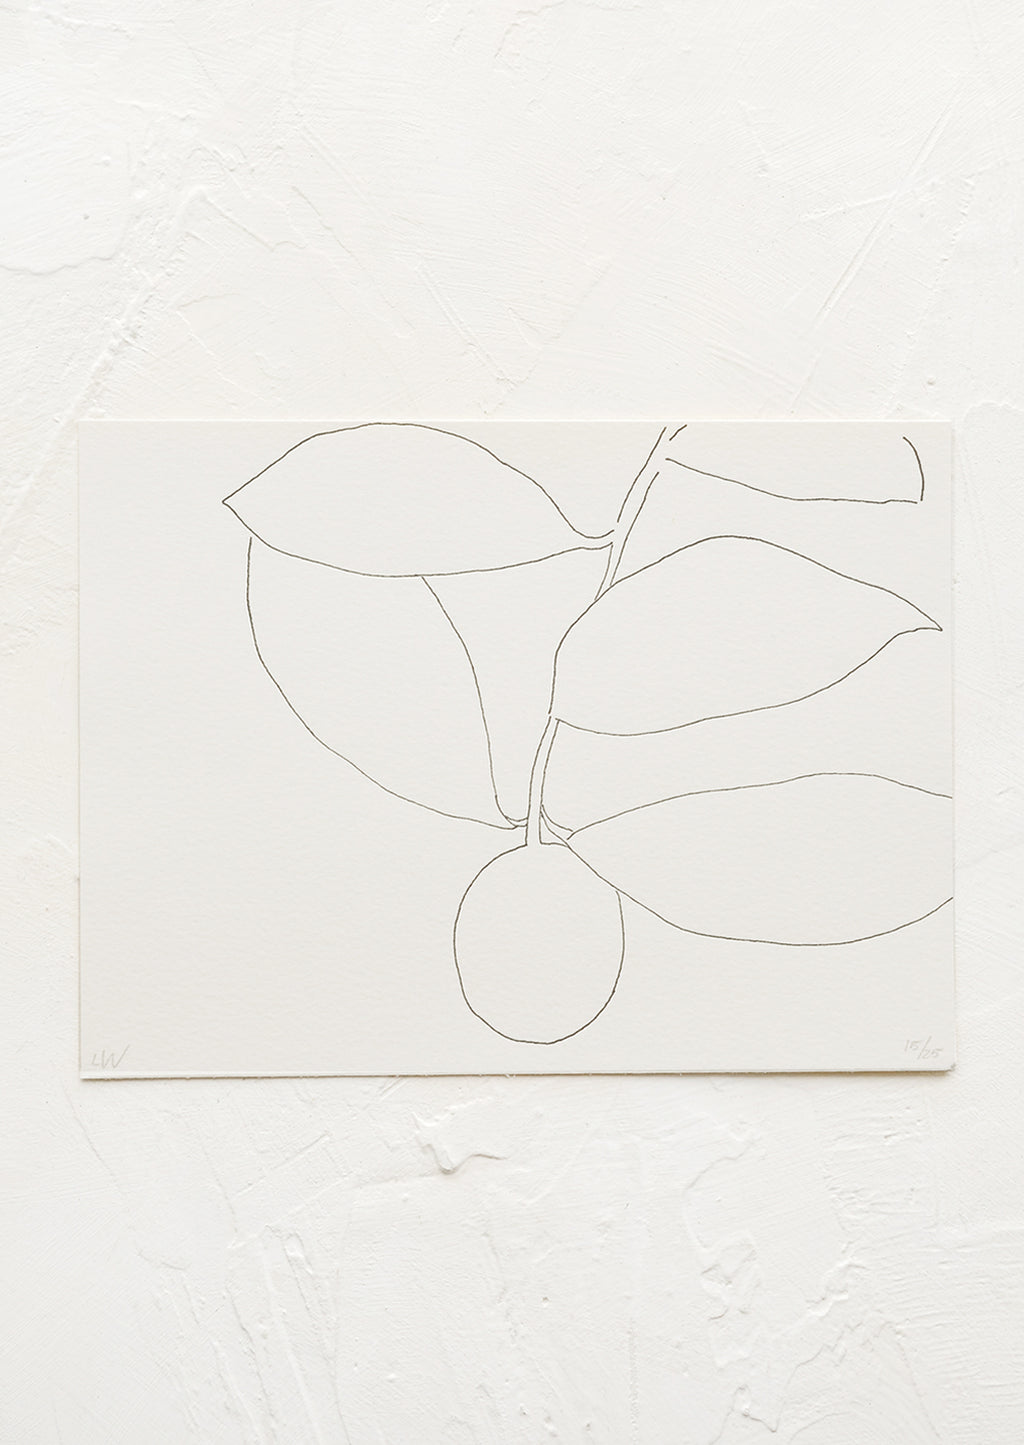 1: A black and white line drawing art print of a kumquat.